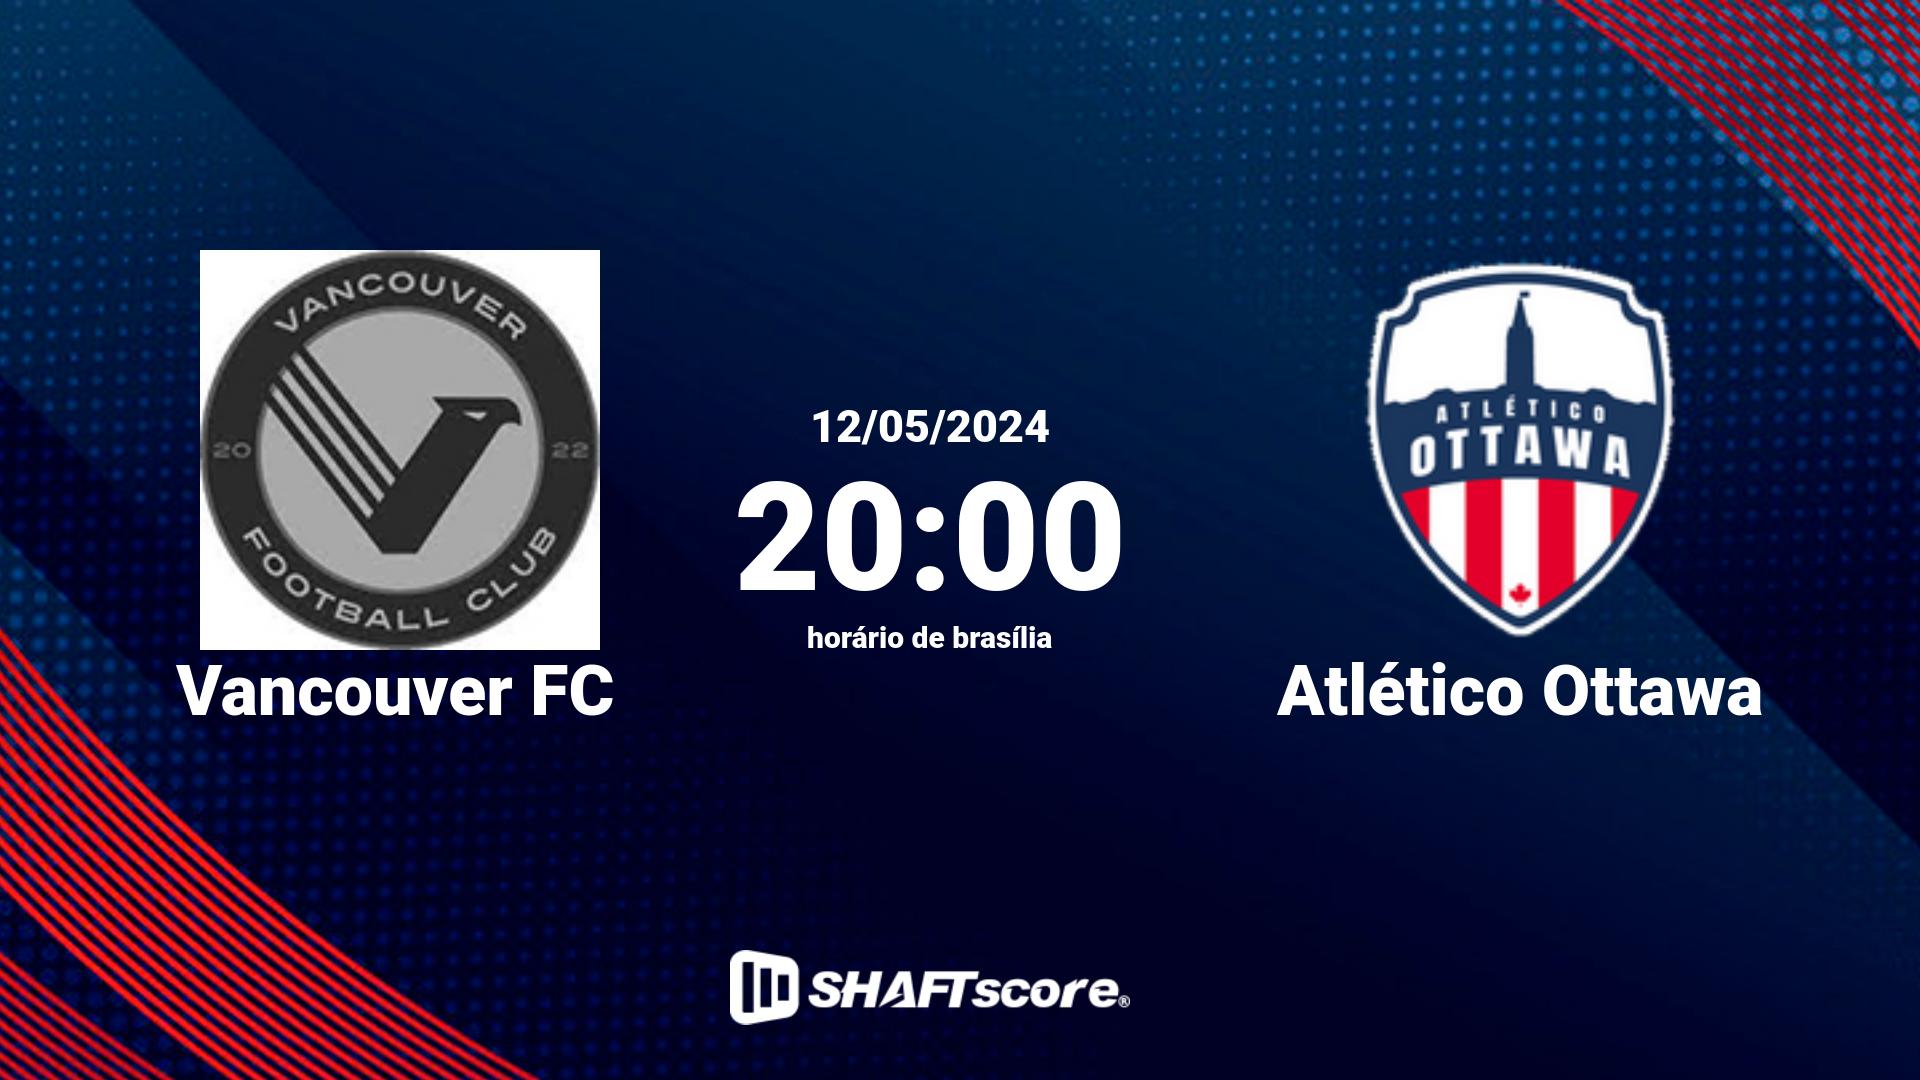 Estatísticas do jogo Vancouver FC vs Atlético Ottawa 12.05 20:00